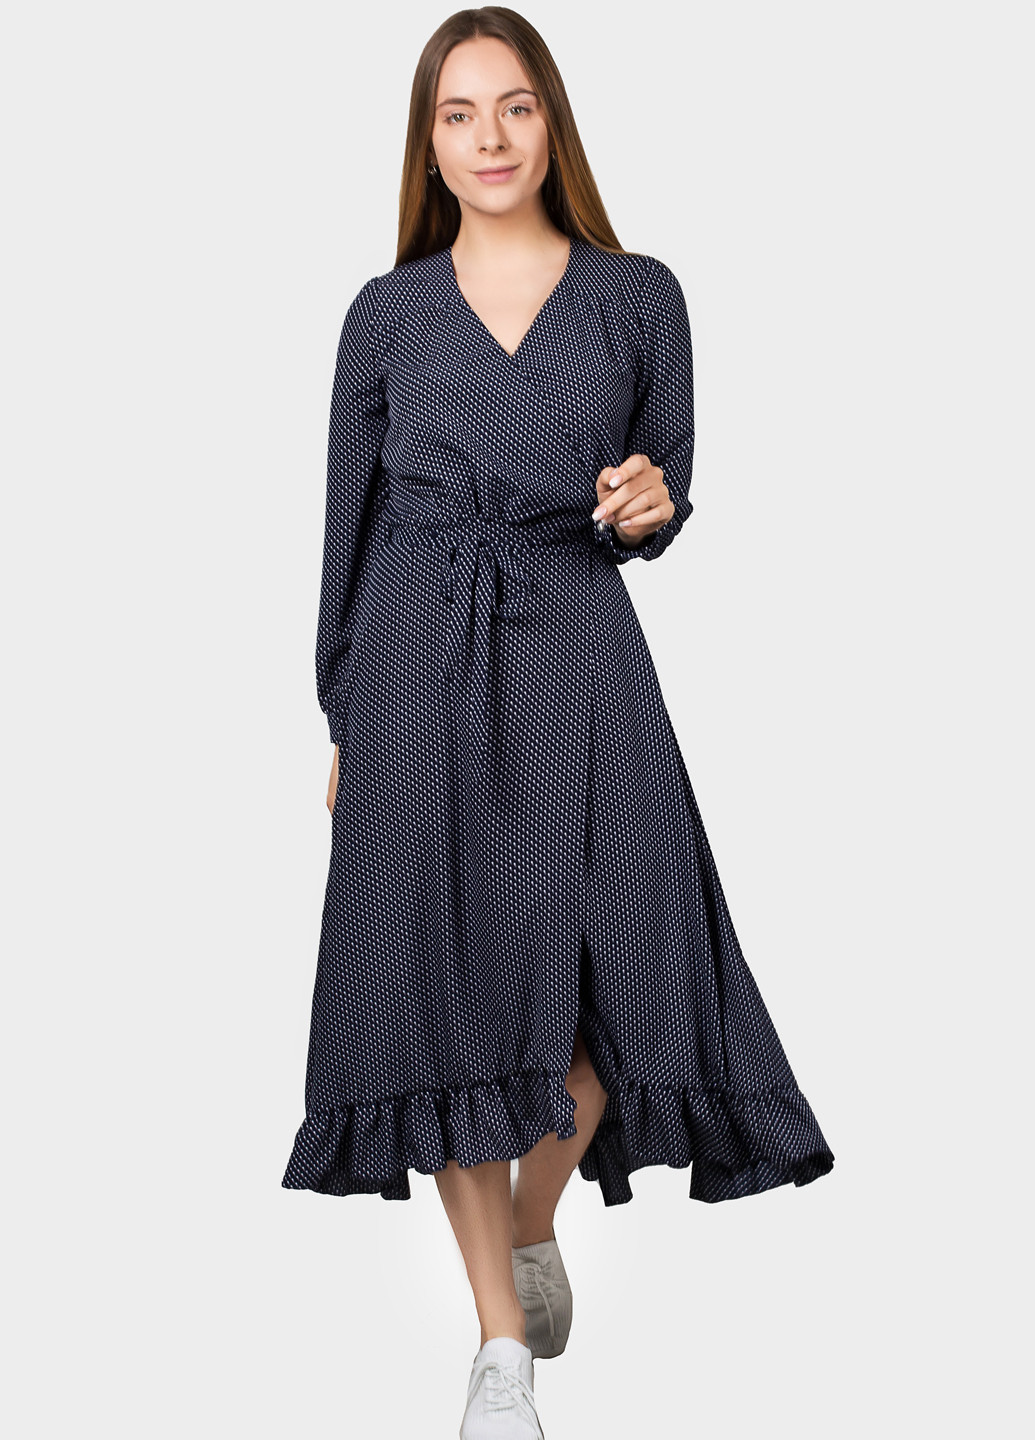 Темно-синее кэжуал платье на запах O`zona milano в горошек